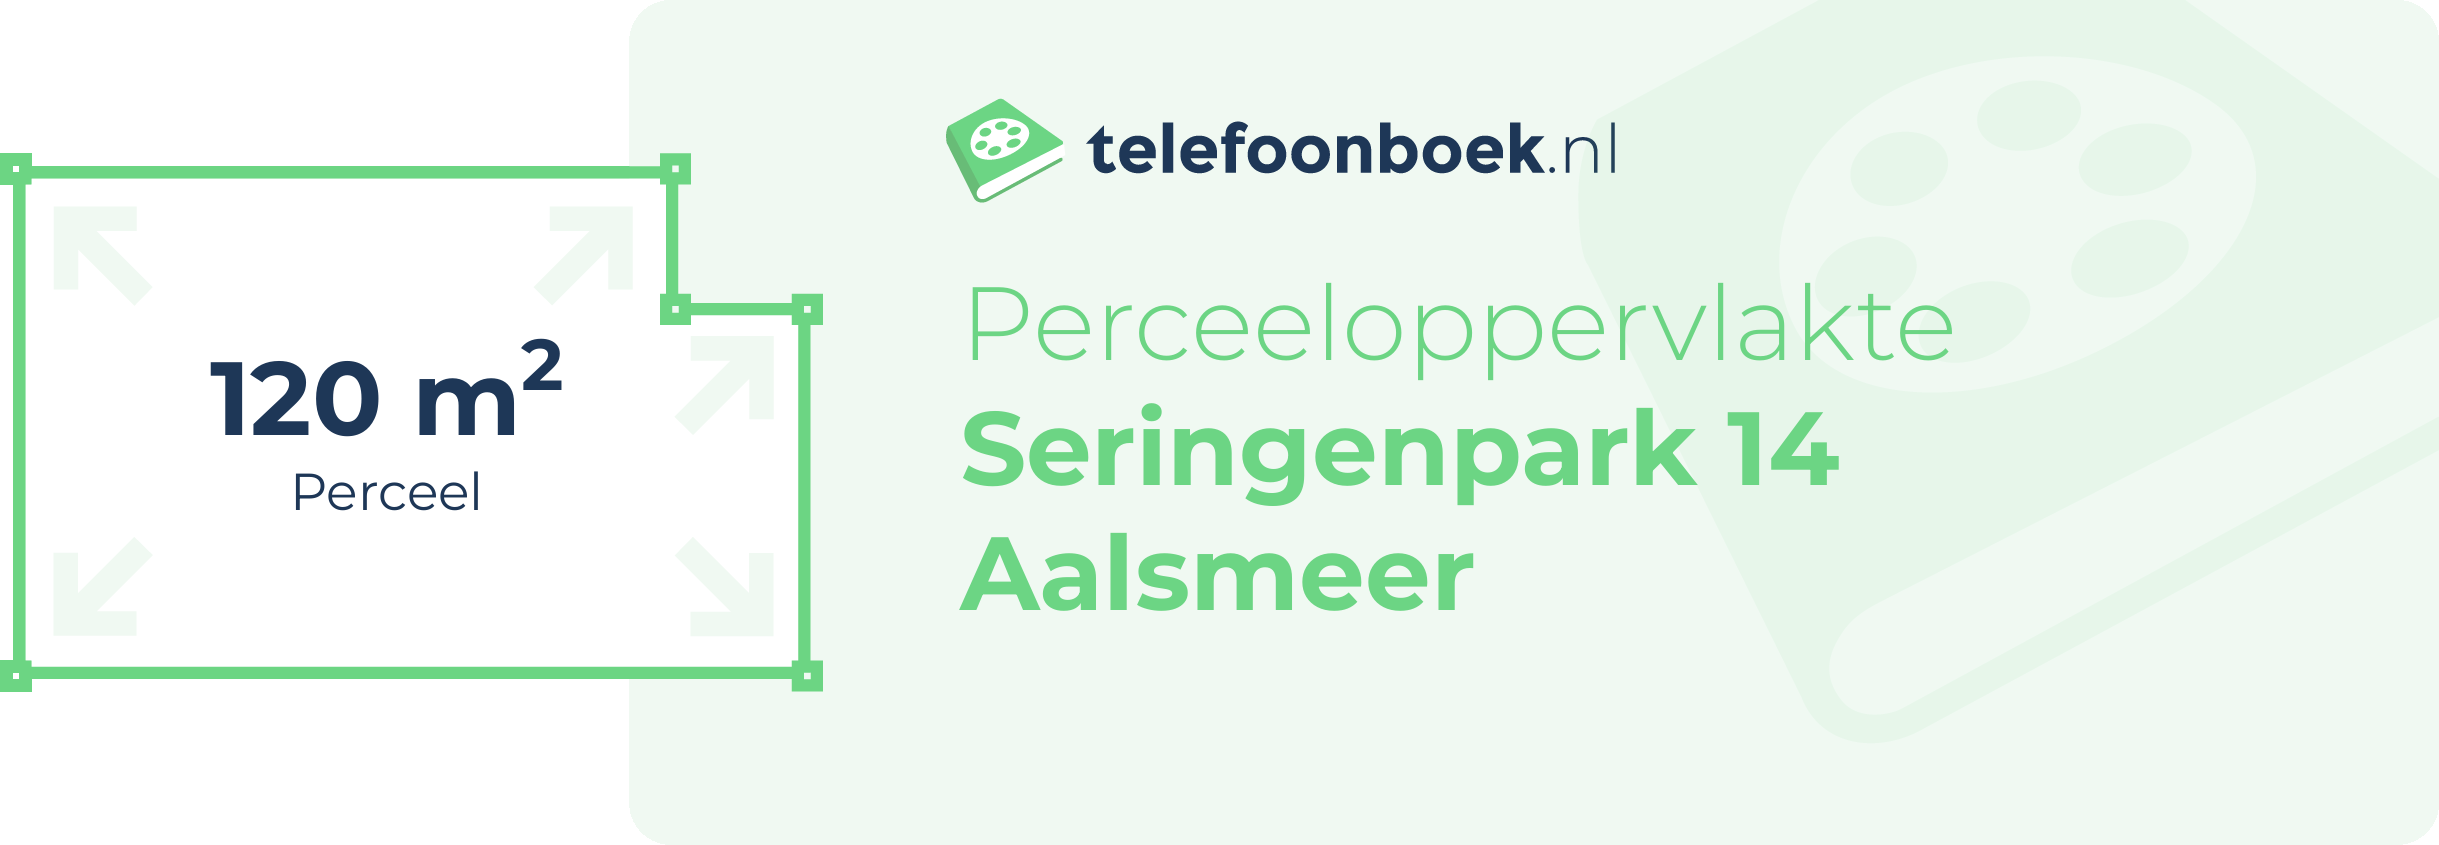 Perceeloppervlakte Seringenpark 14 Aalsmeer